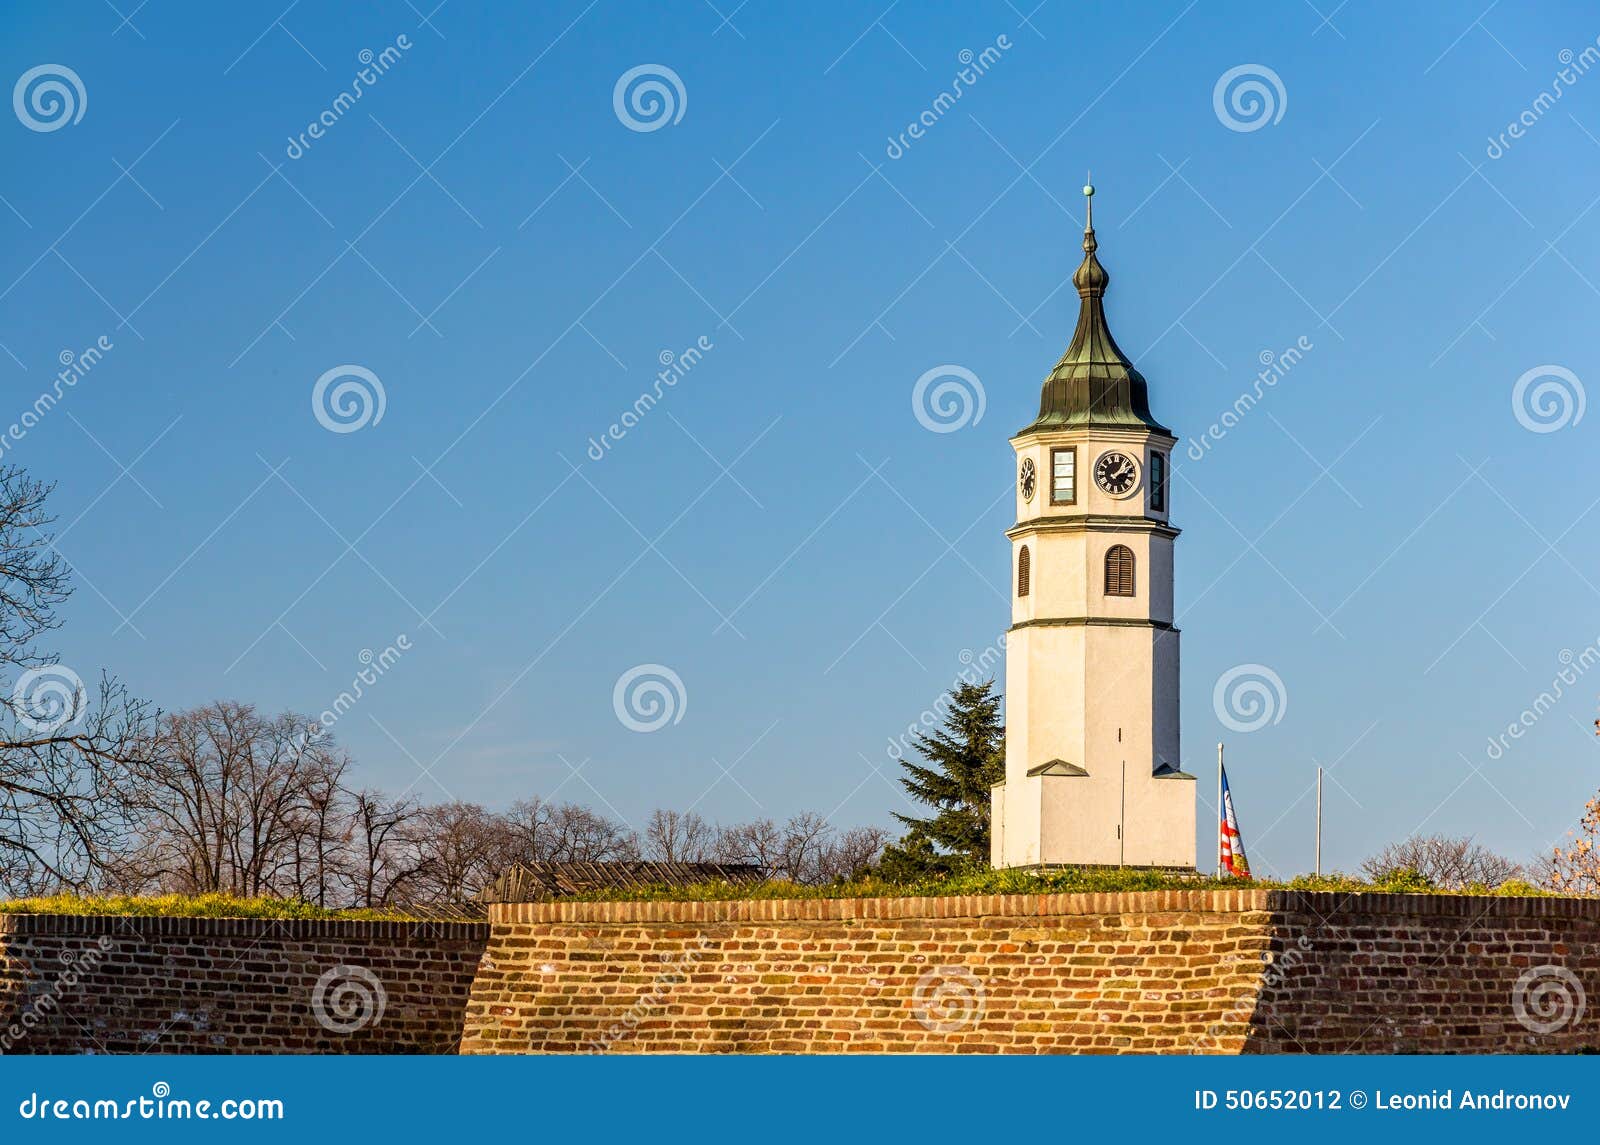 sahat (clock) tower of belgrade fortress